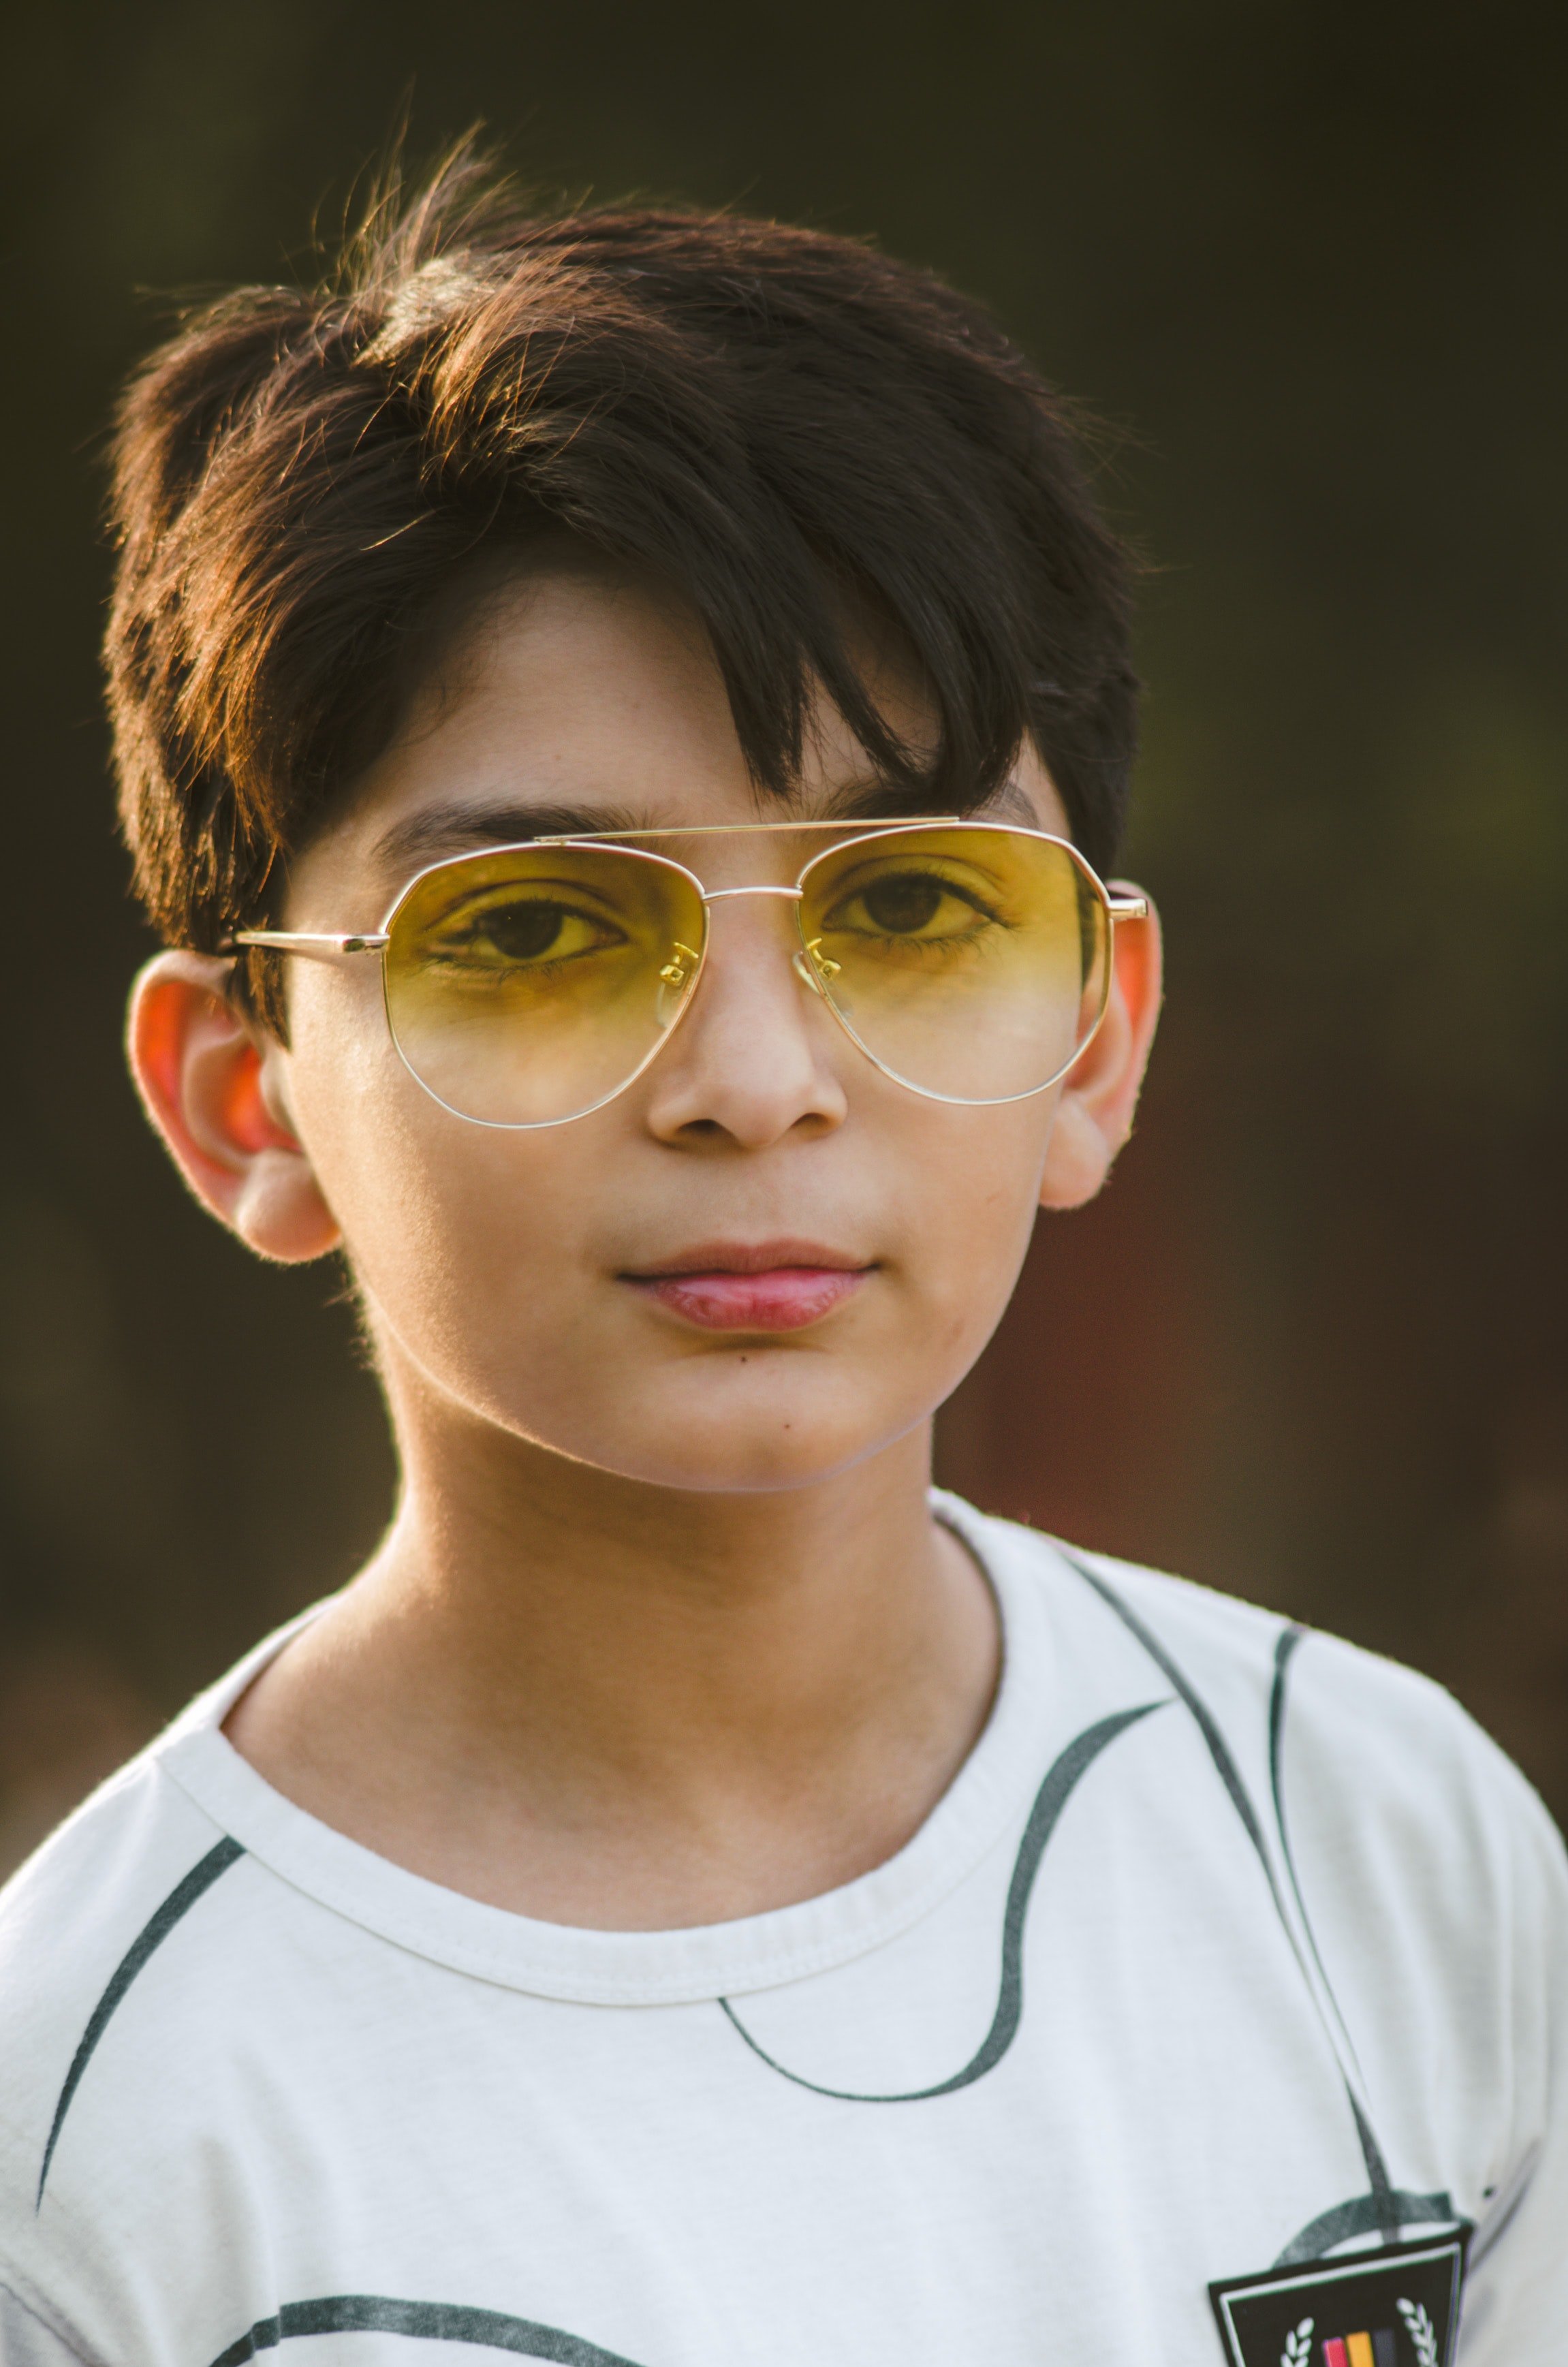 Niño con gafas de aviador. | Foto: Unsplash